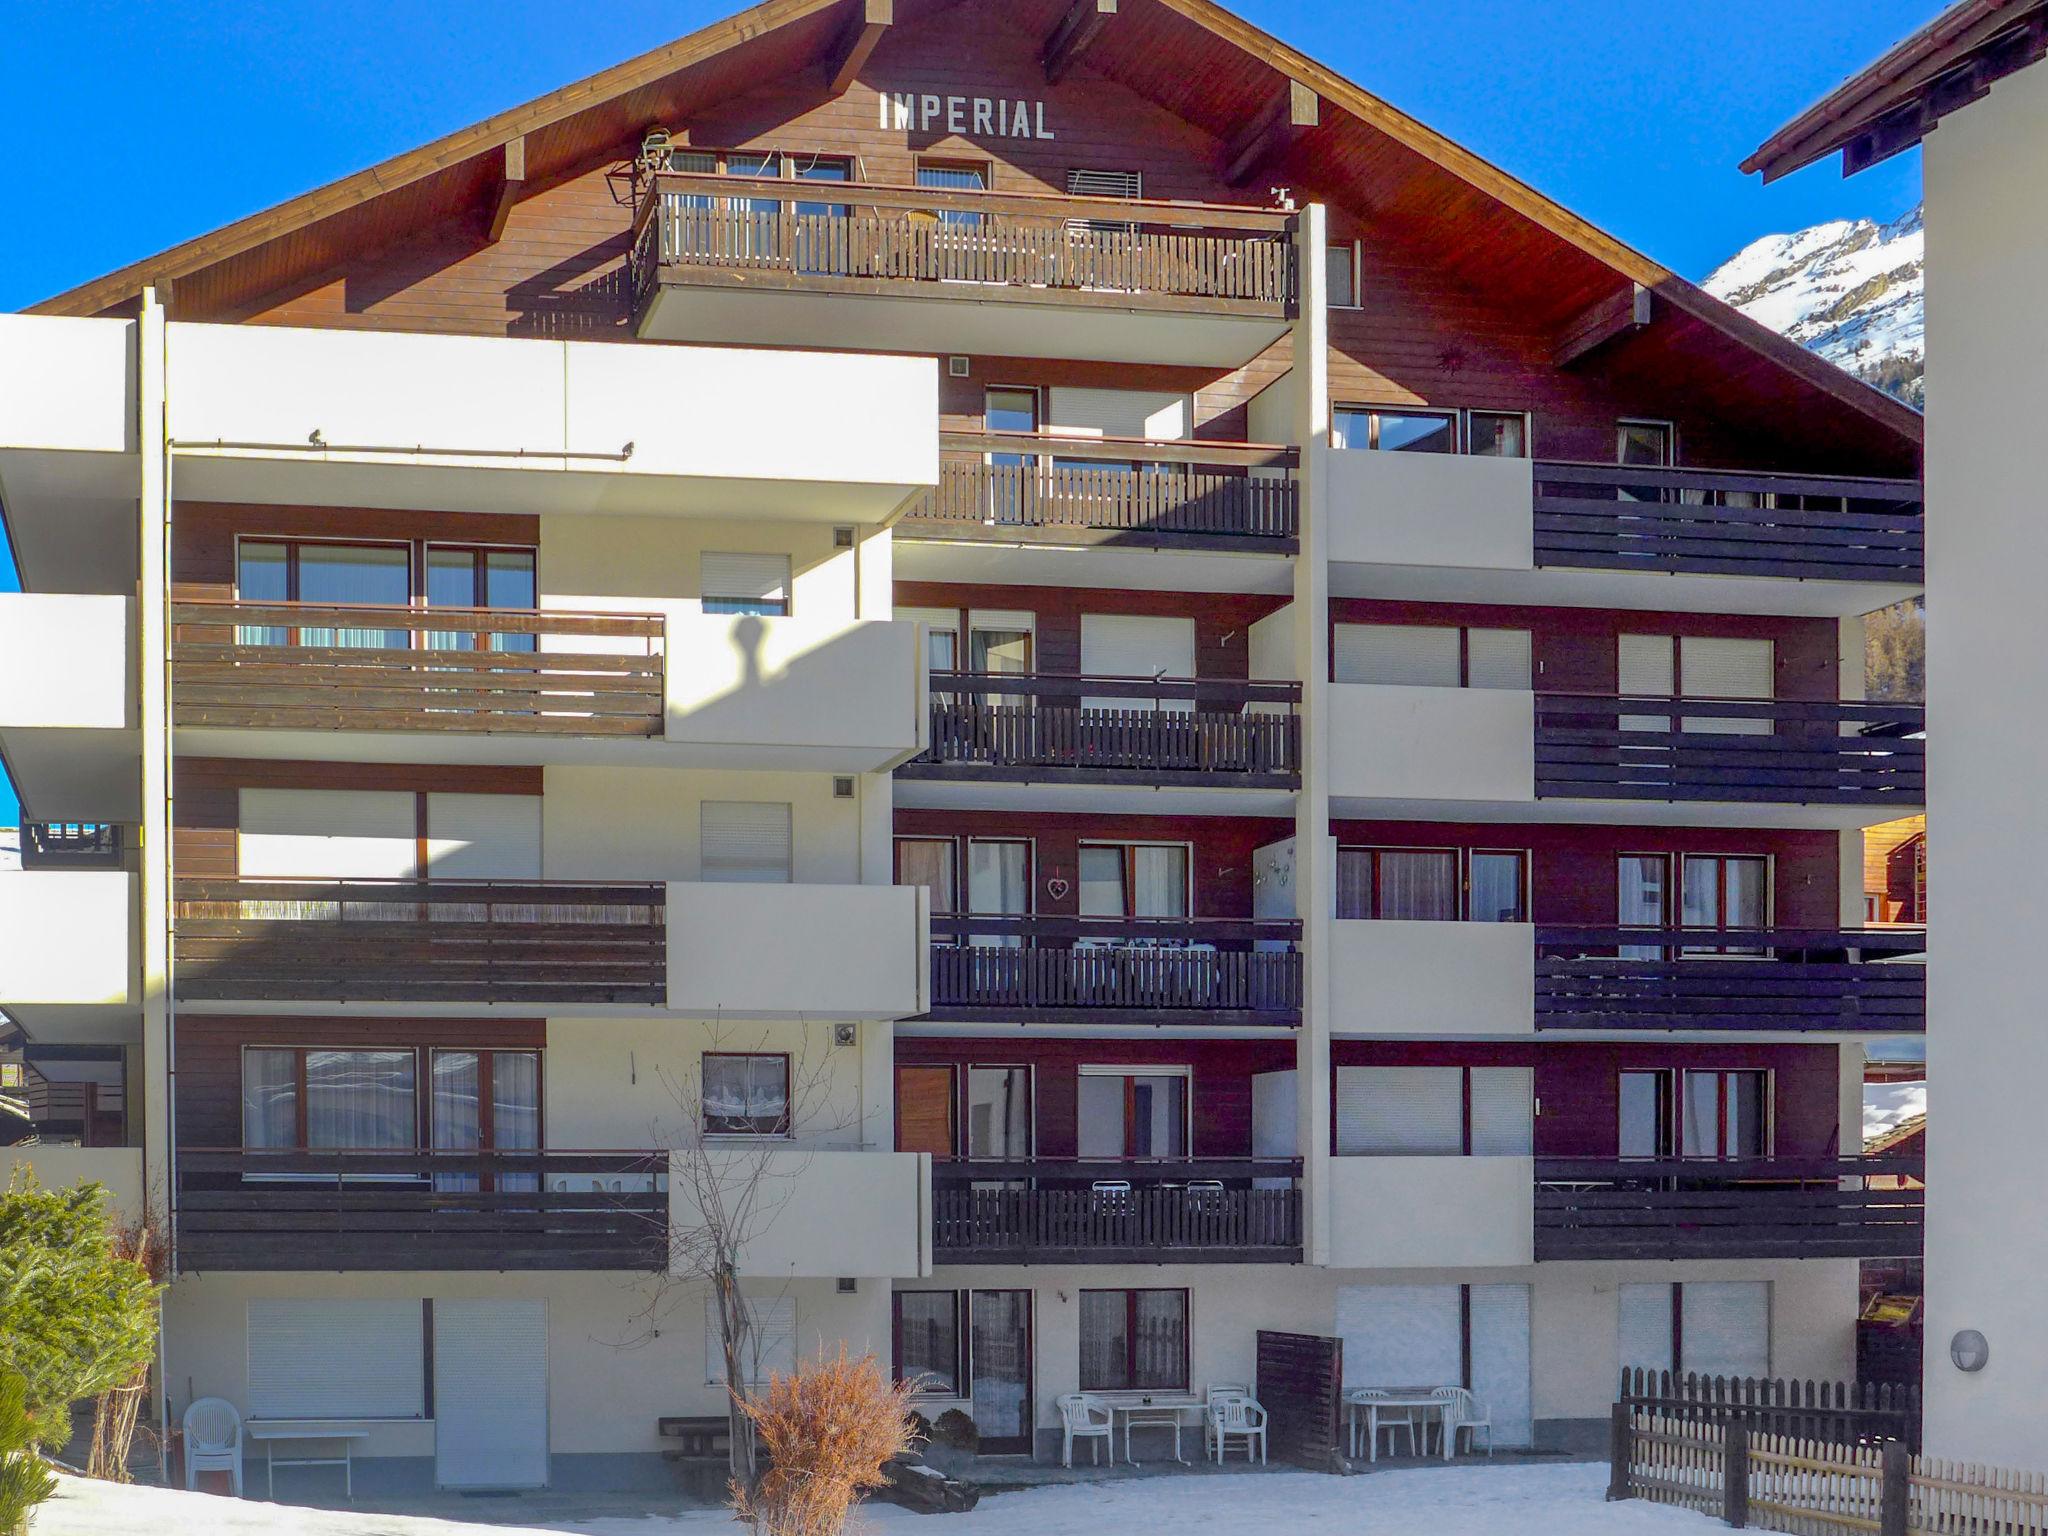 Photo 10 - 1 bedroom Apartment in Zermatt with mountain view